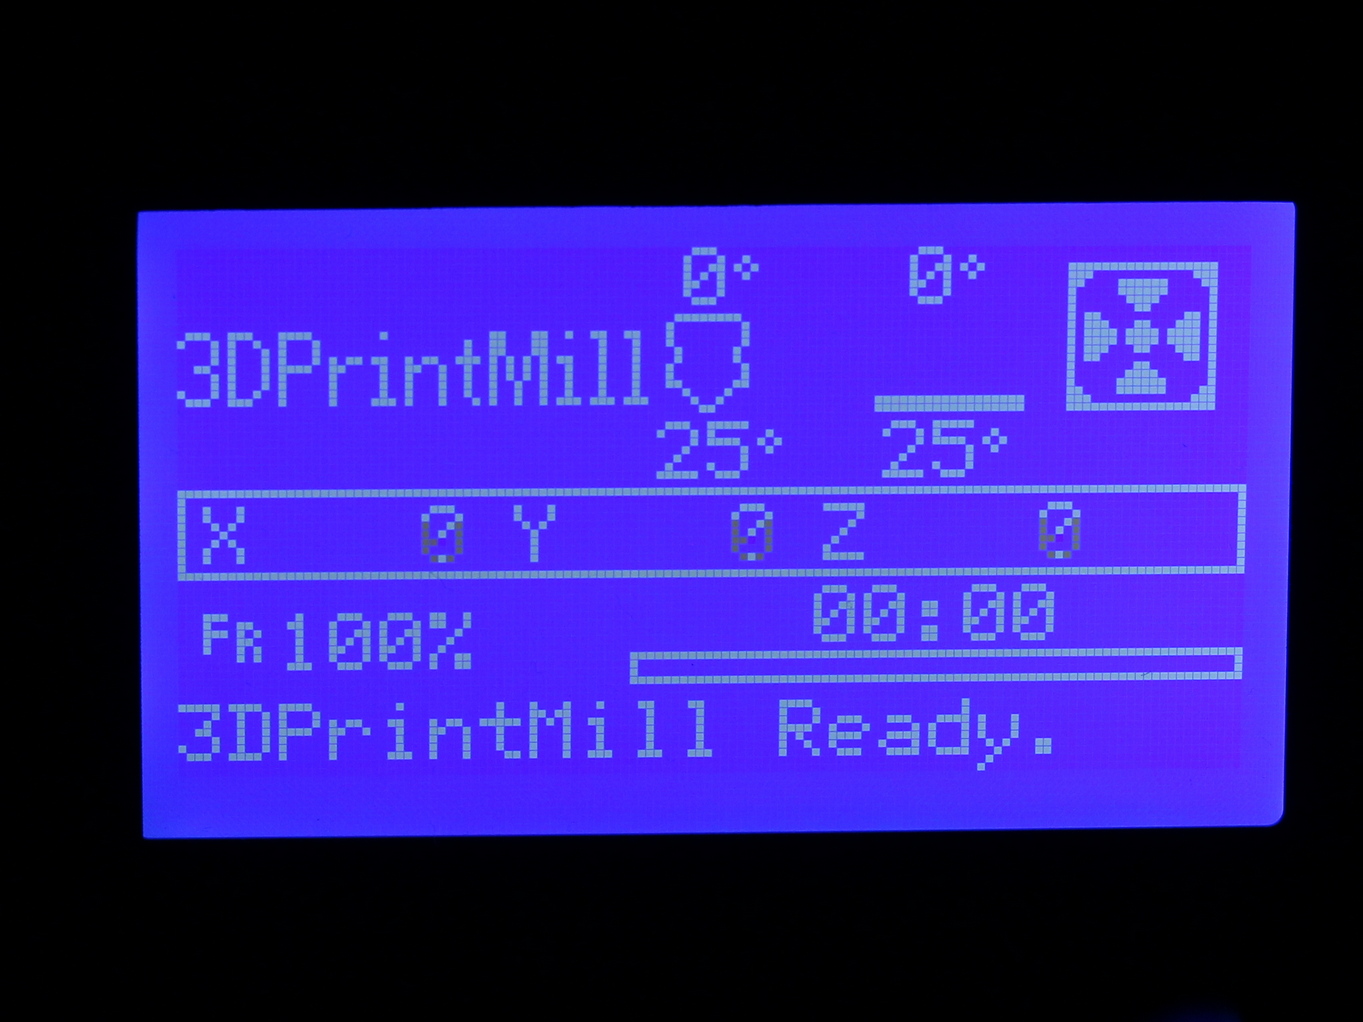 Creality 3DPrintMill Screen CR 30 1 | Creality 3DPrintMill (CR-30) Review: Belt Printer for Batch 3D Printing